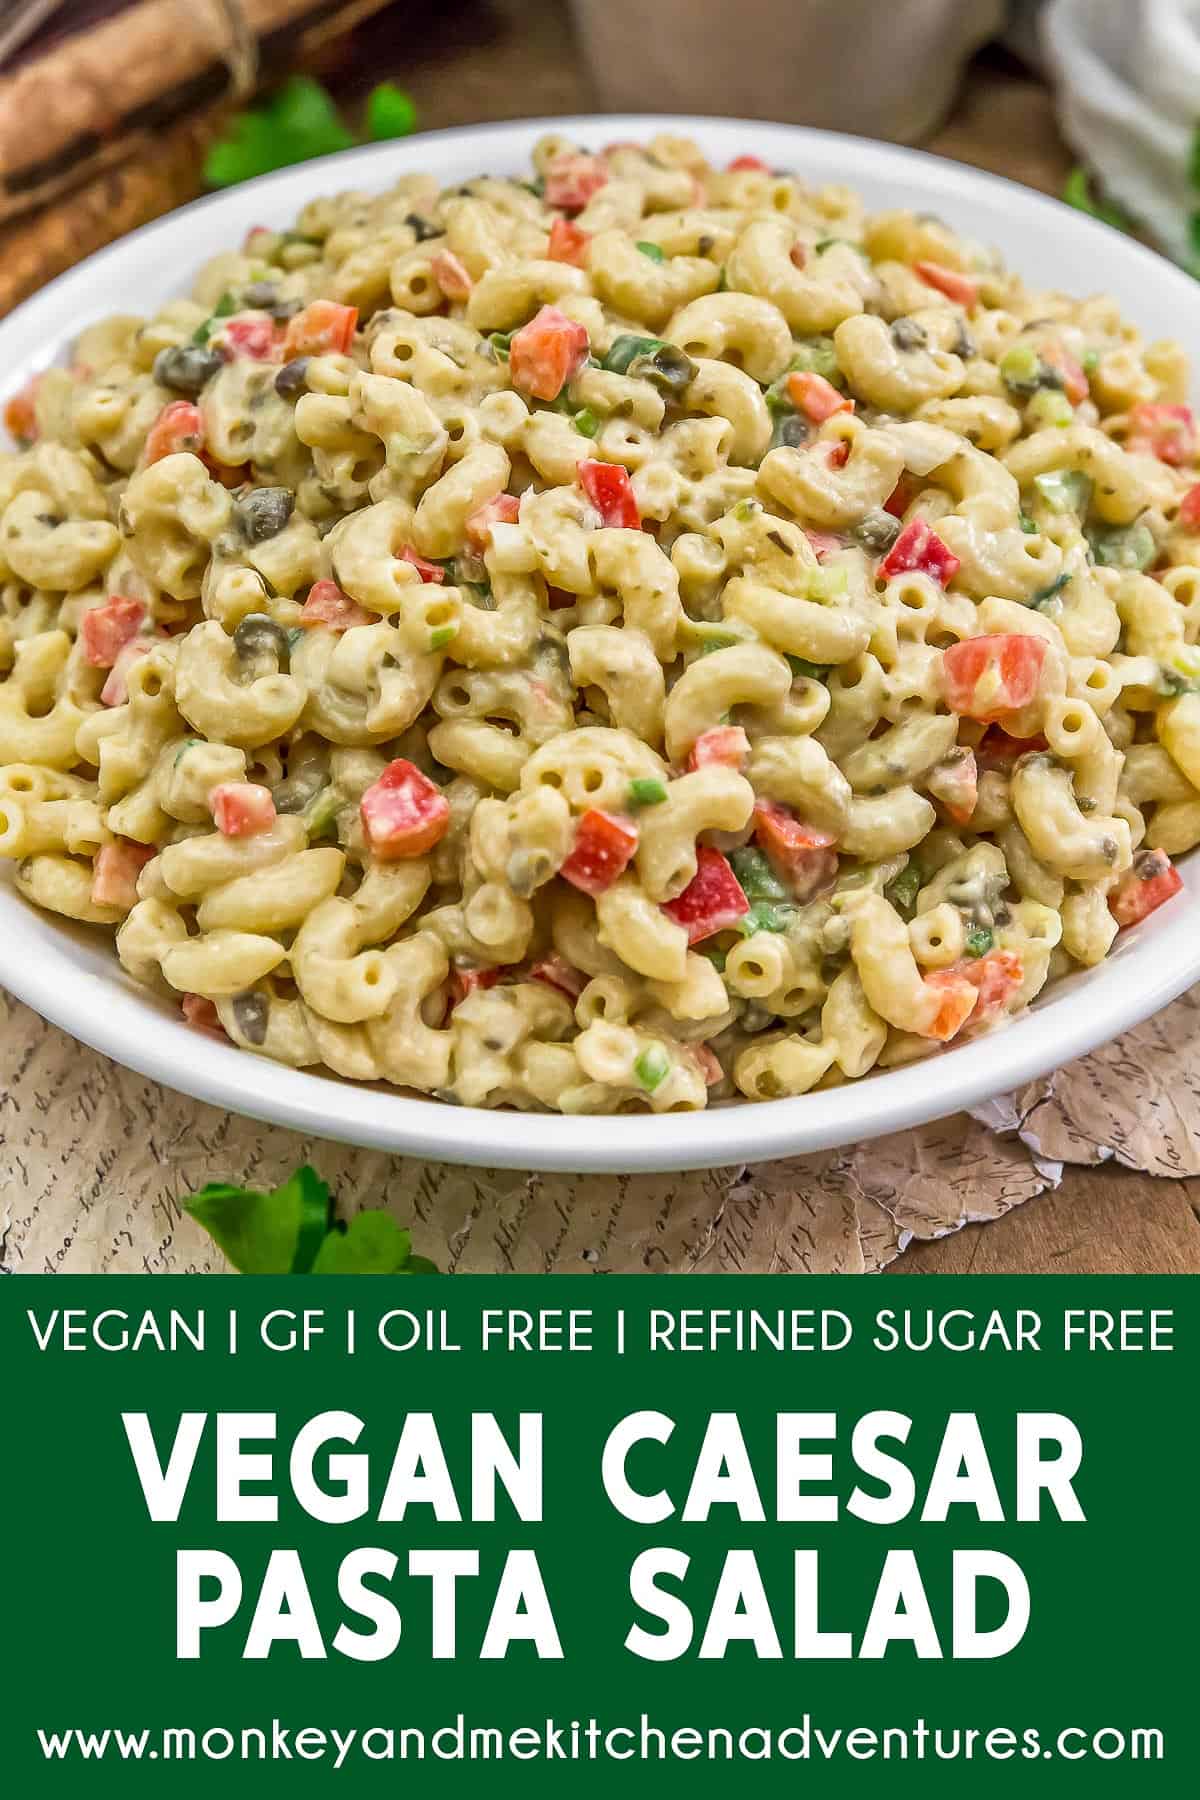 Vegan Caesar Pasta Salad with Text Description